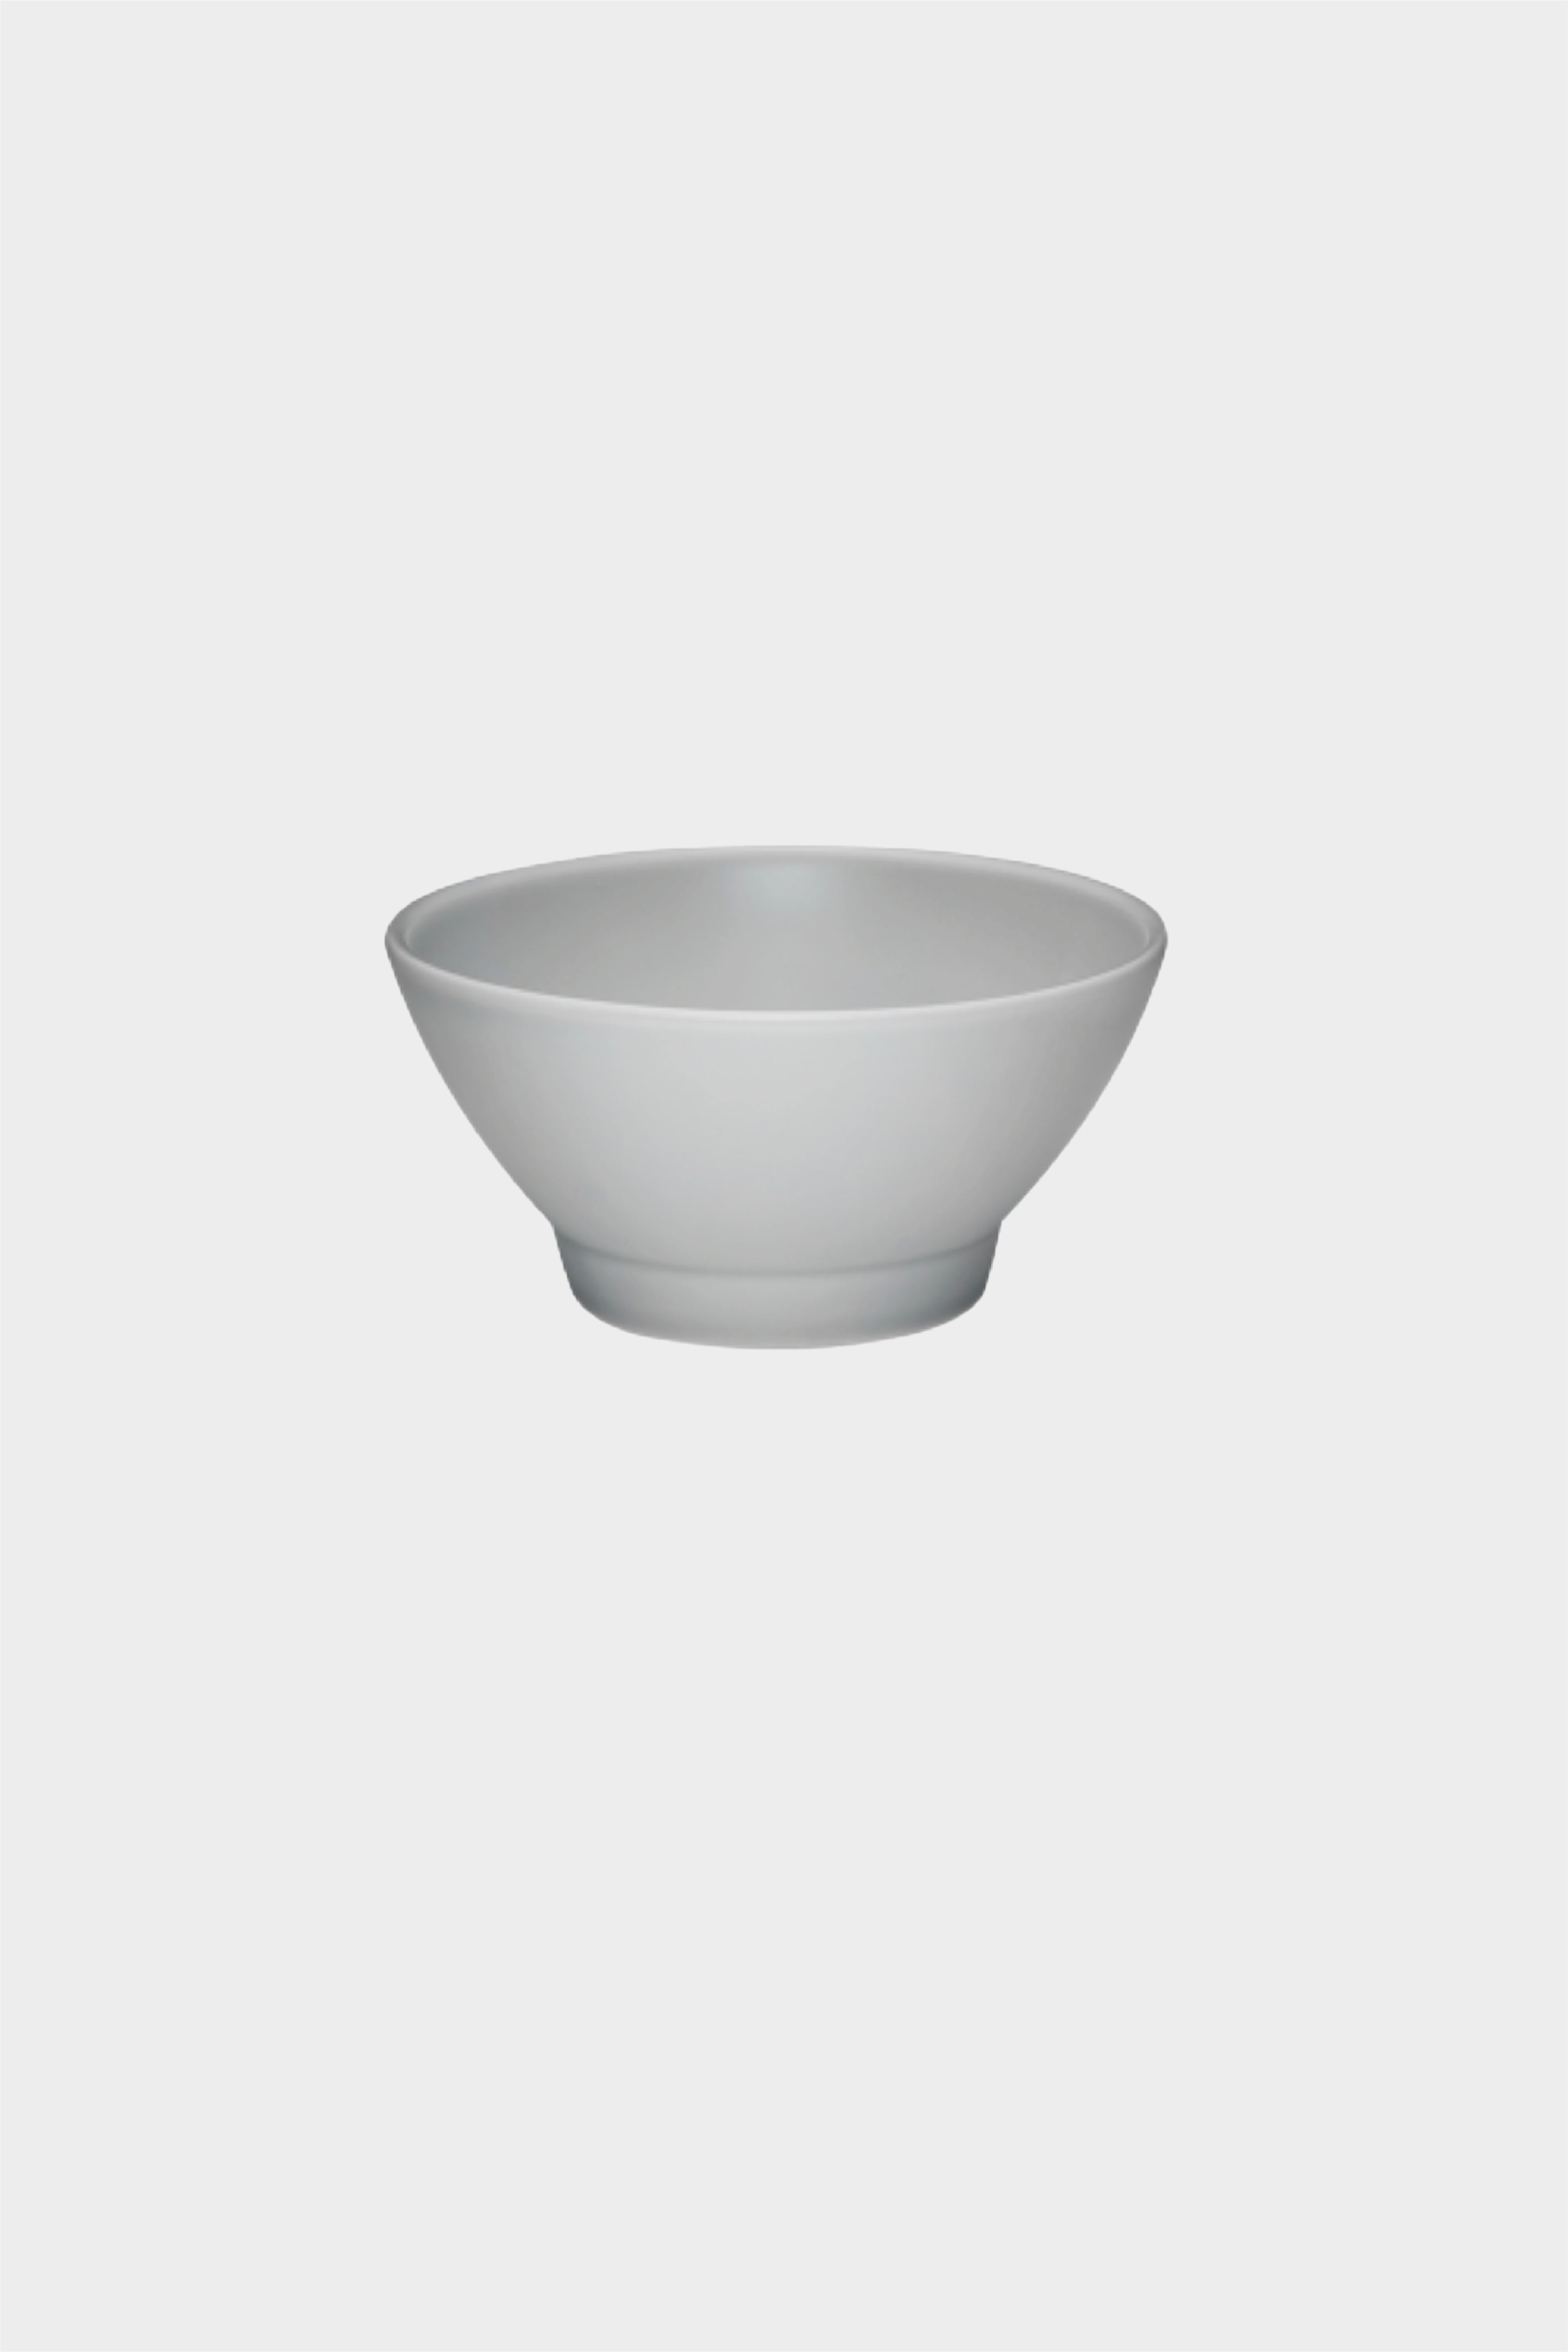 Selectshop FRAME - COMMON Rice Bowl (120mm) All-Accessories Concept Store Dubai